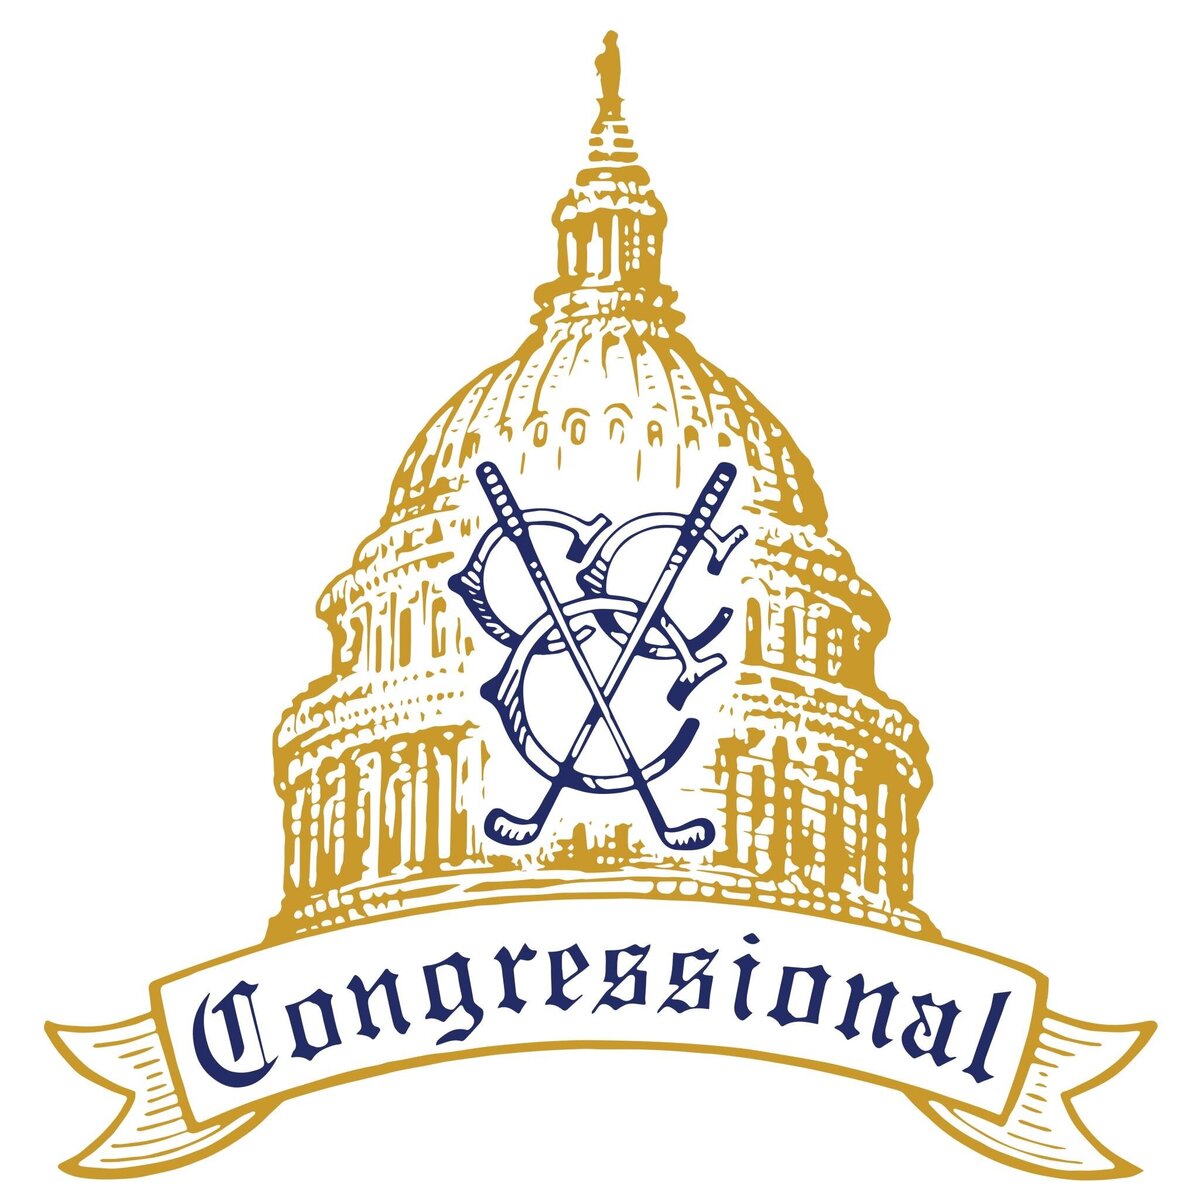 CongressionalCountryClub_Logo